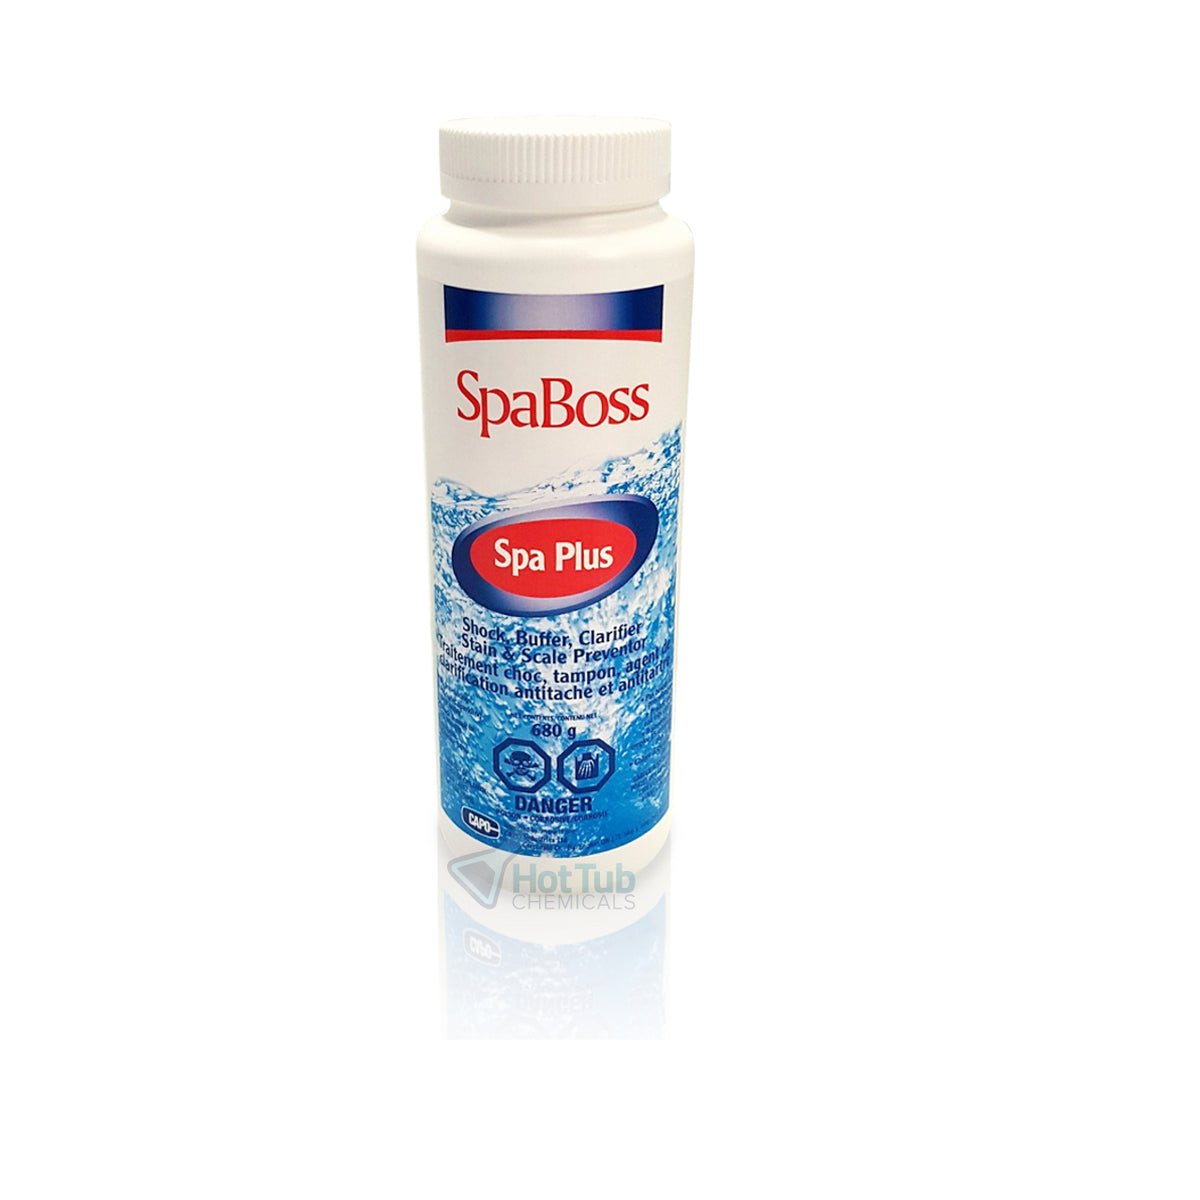 SpaBoss Spa Plus - hottubchemicals